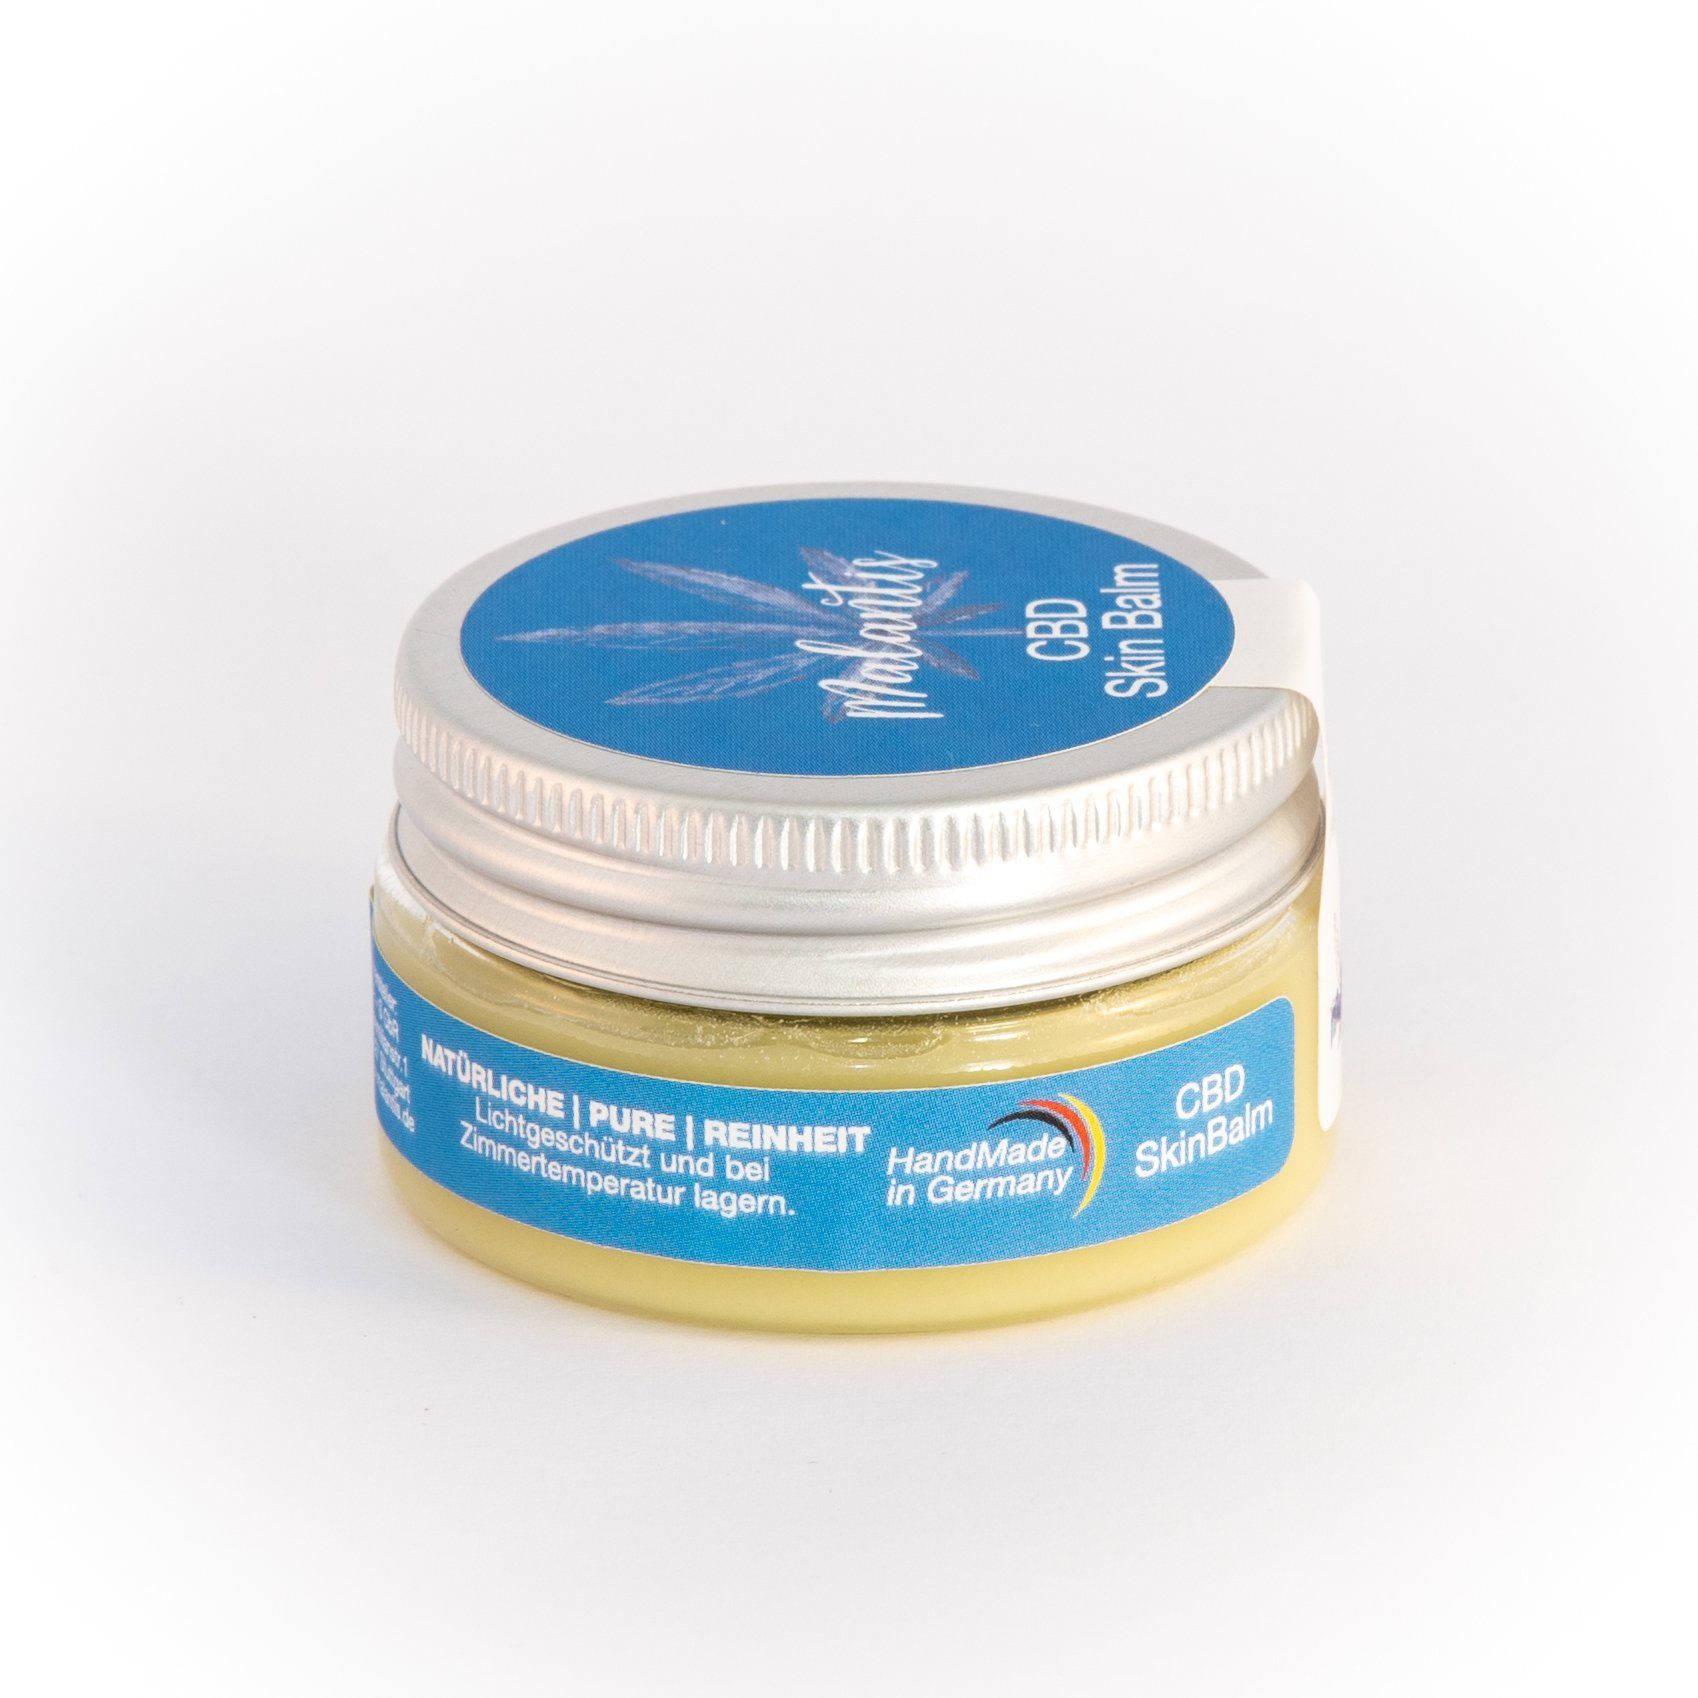 Vitamin Naturkosmetik Arganöl, SkinBalm E Sheabutter, Original mit 100% und Körperbalsam handmade Malantis CBD